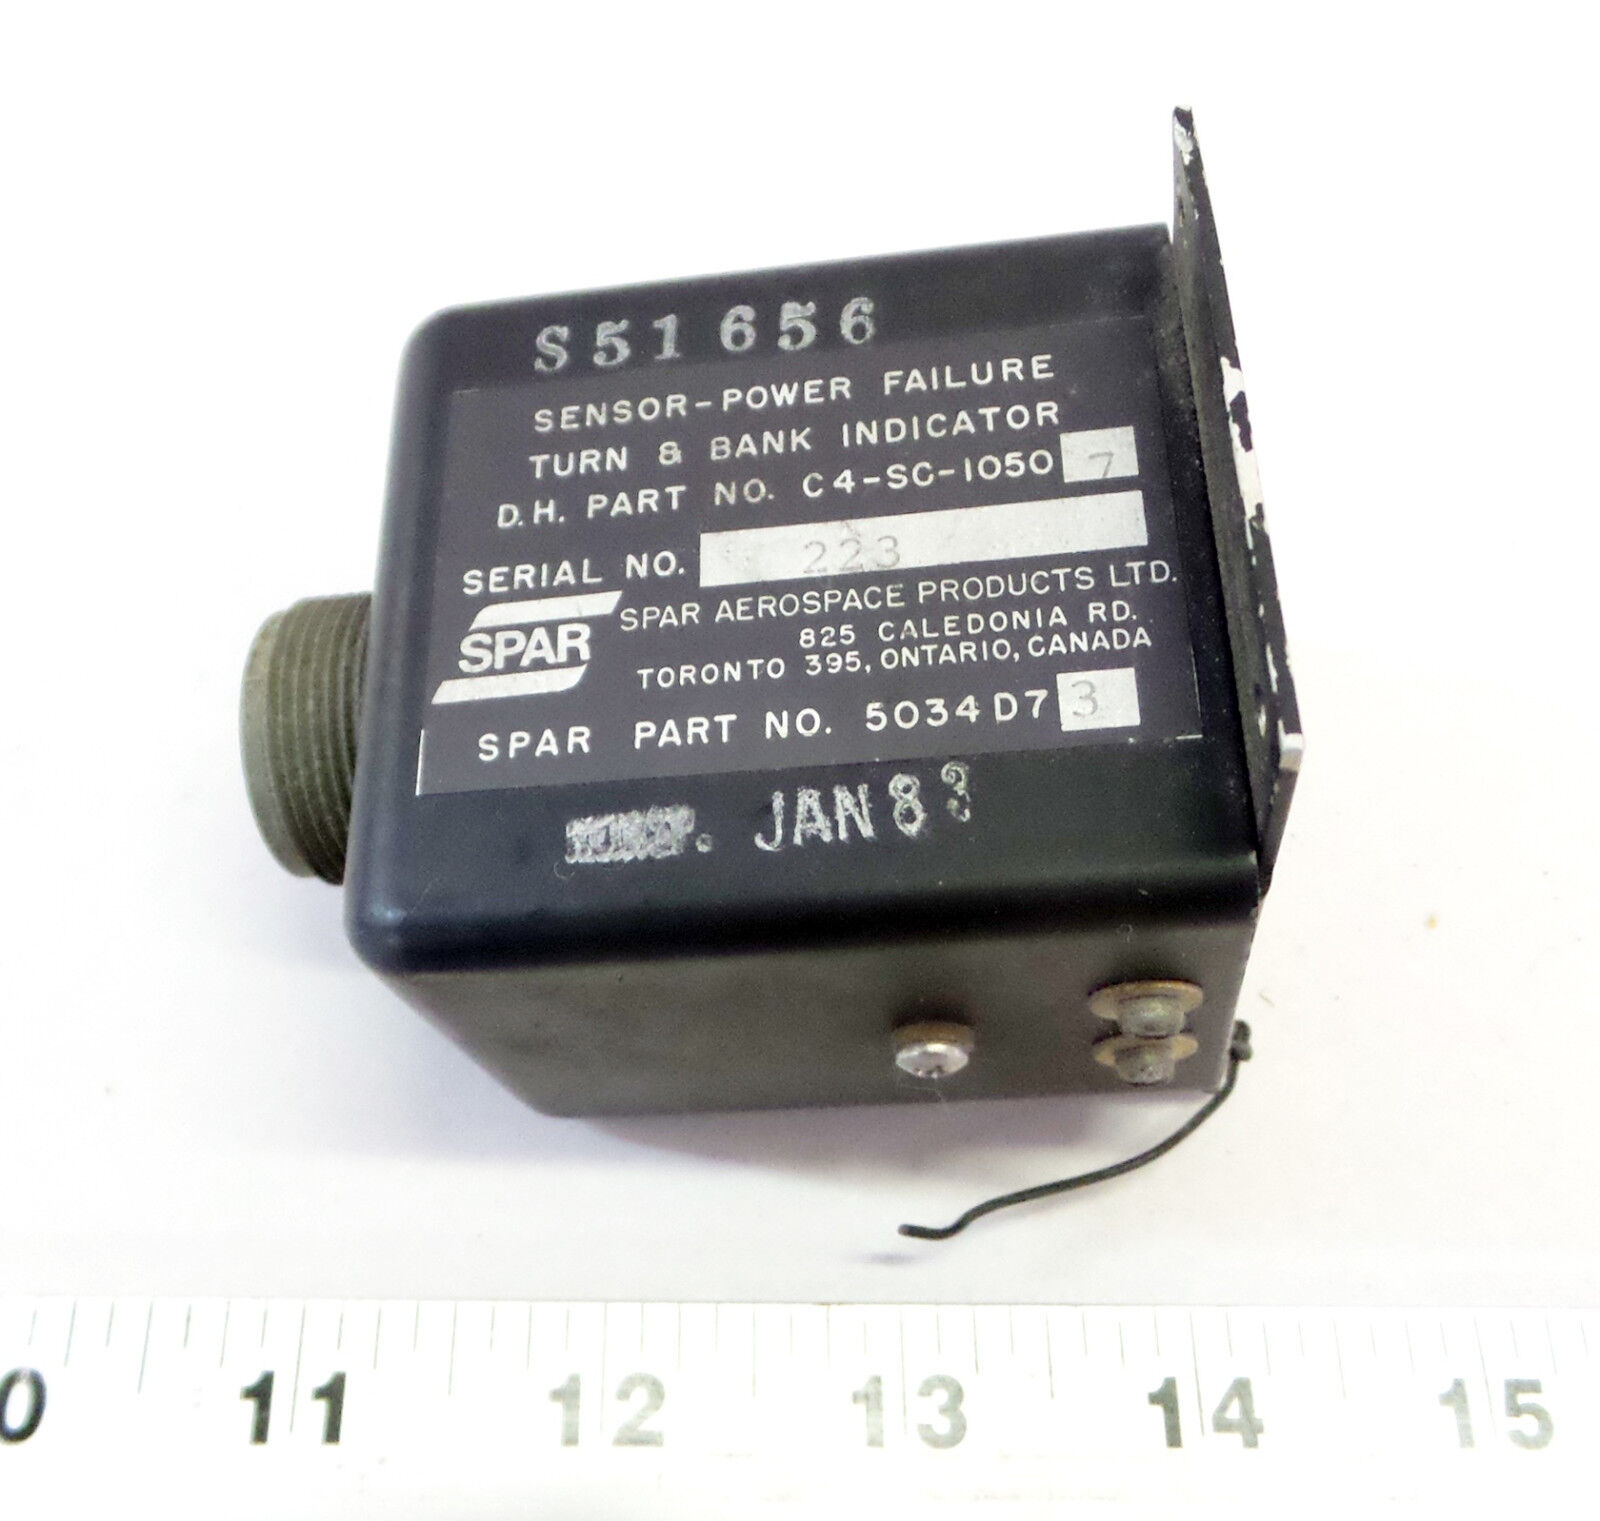 Vintage Spar Aerospace C4-SC-1050-7 Power Sensor Failure Turn & Bank Indicator